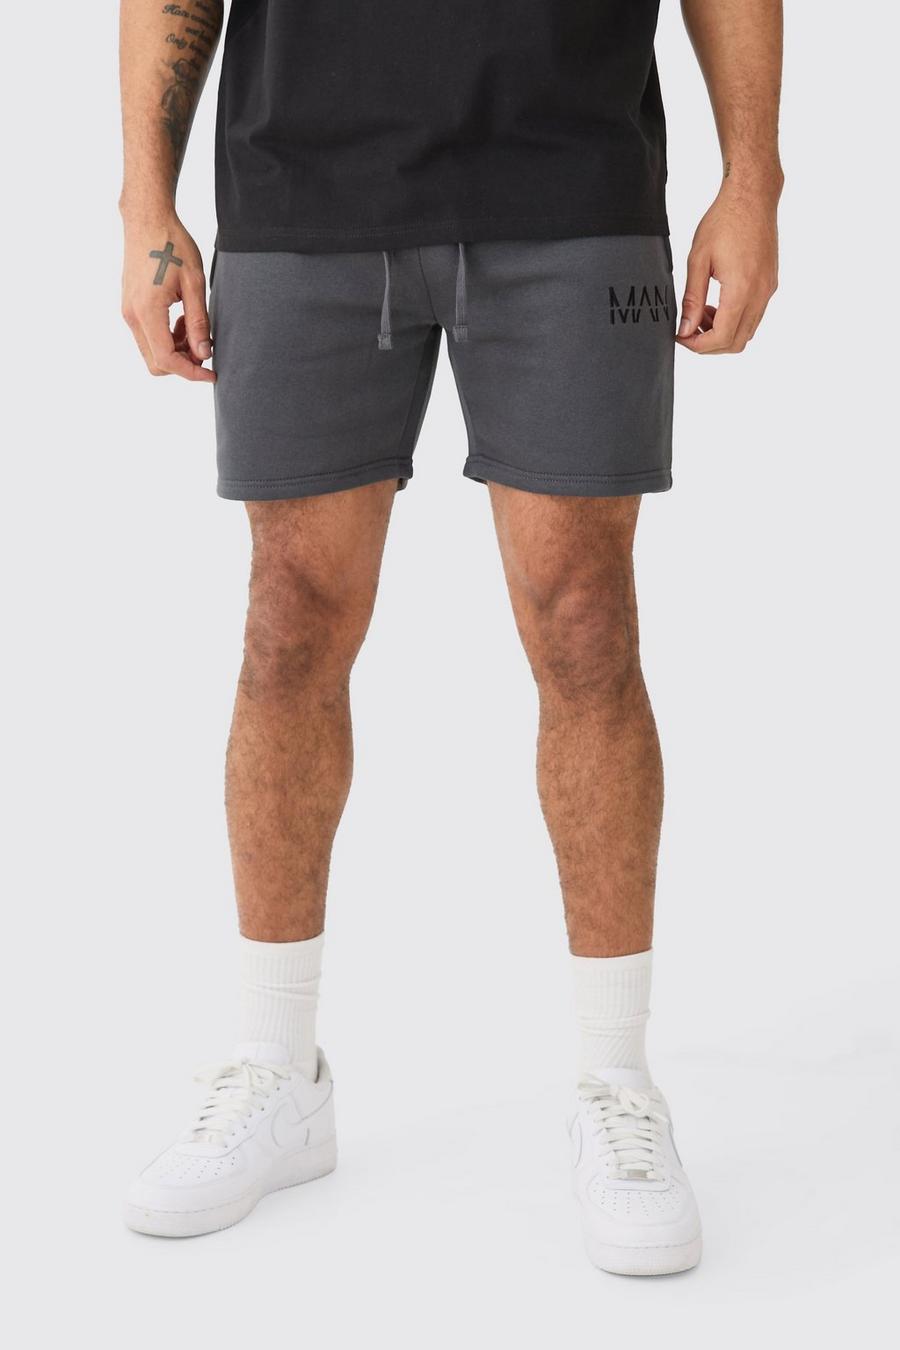 Man-Dash Slim-Fit Shorts, Charcoal